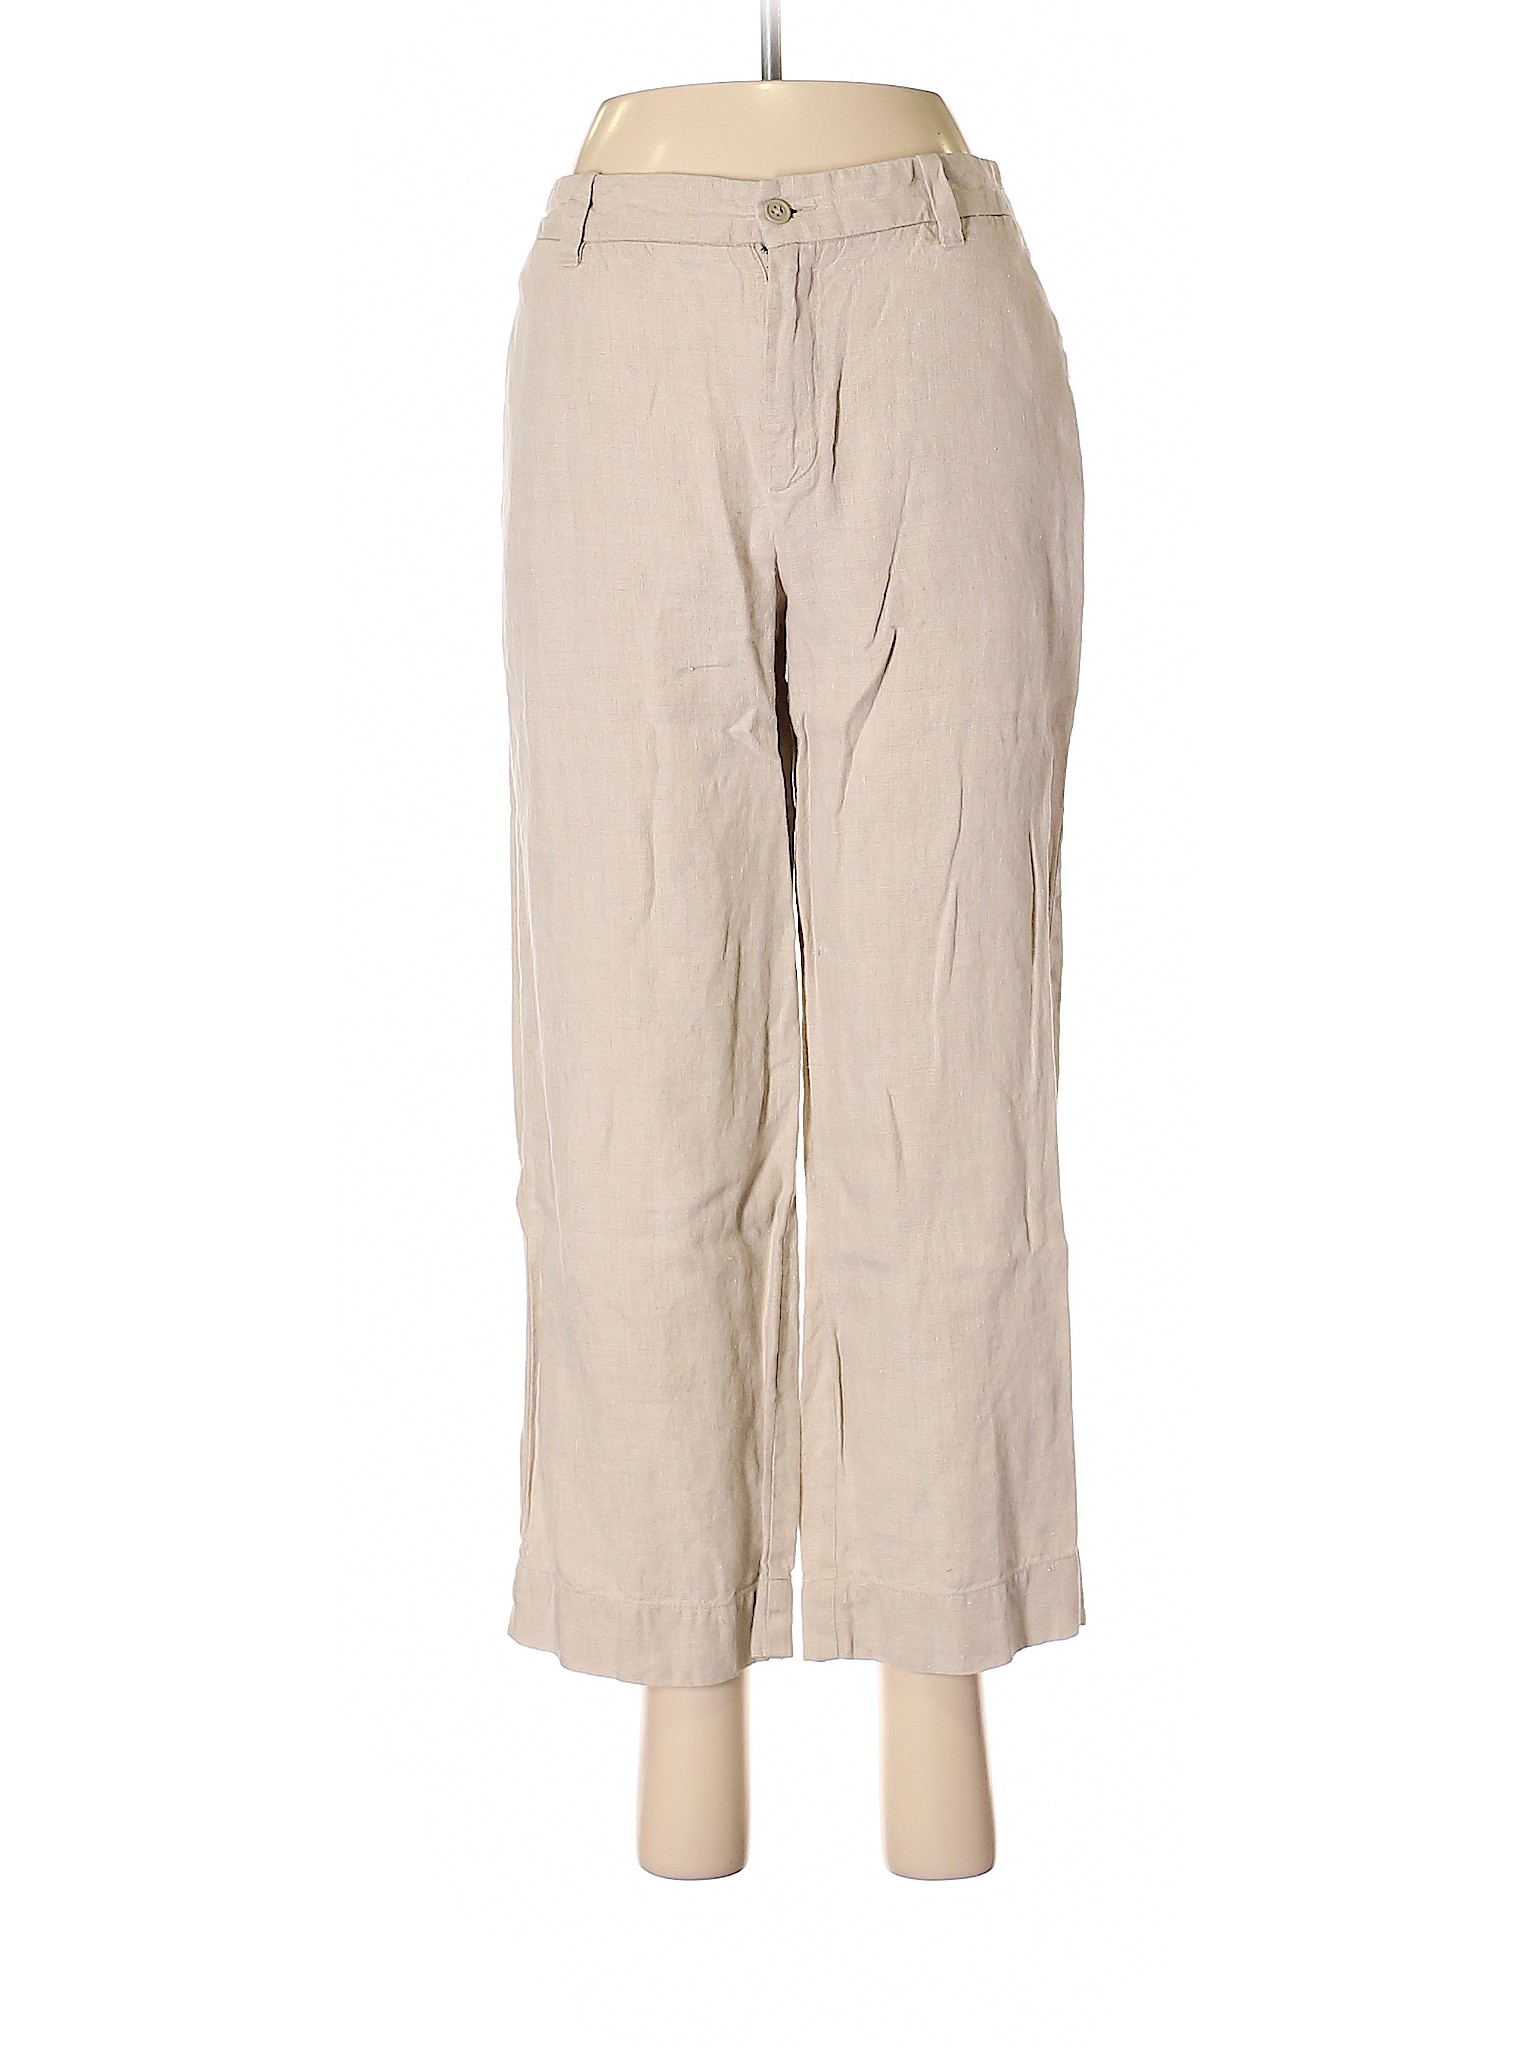 gap linen pants